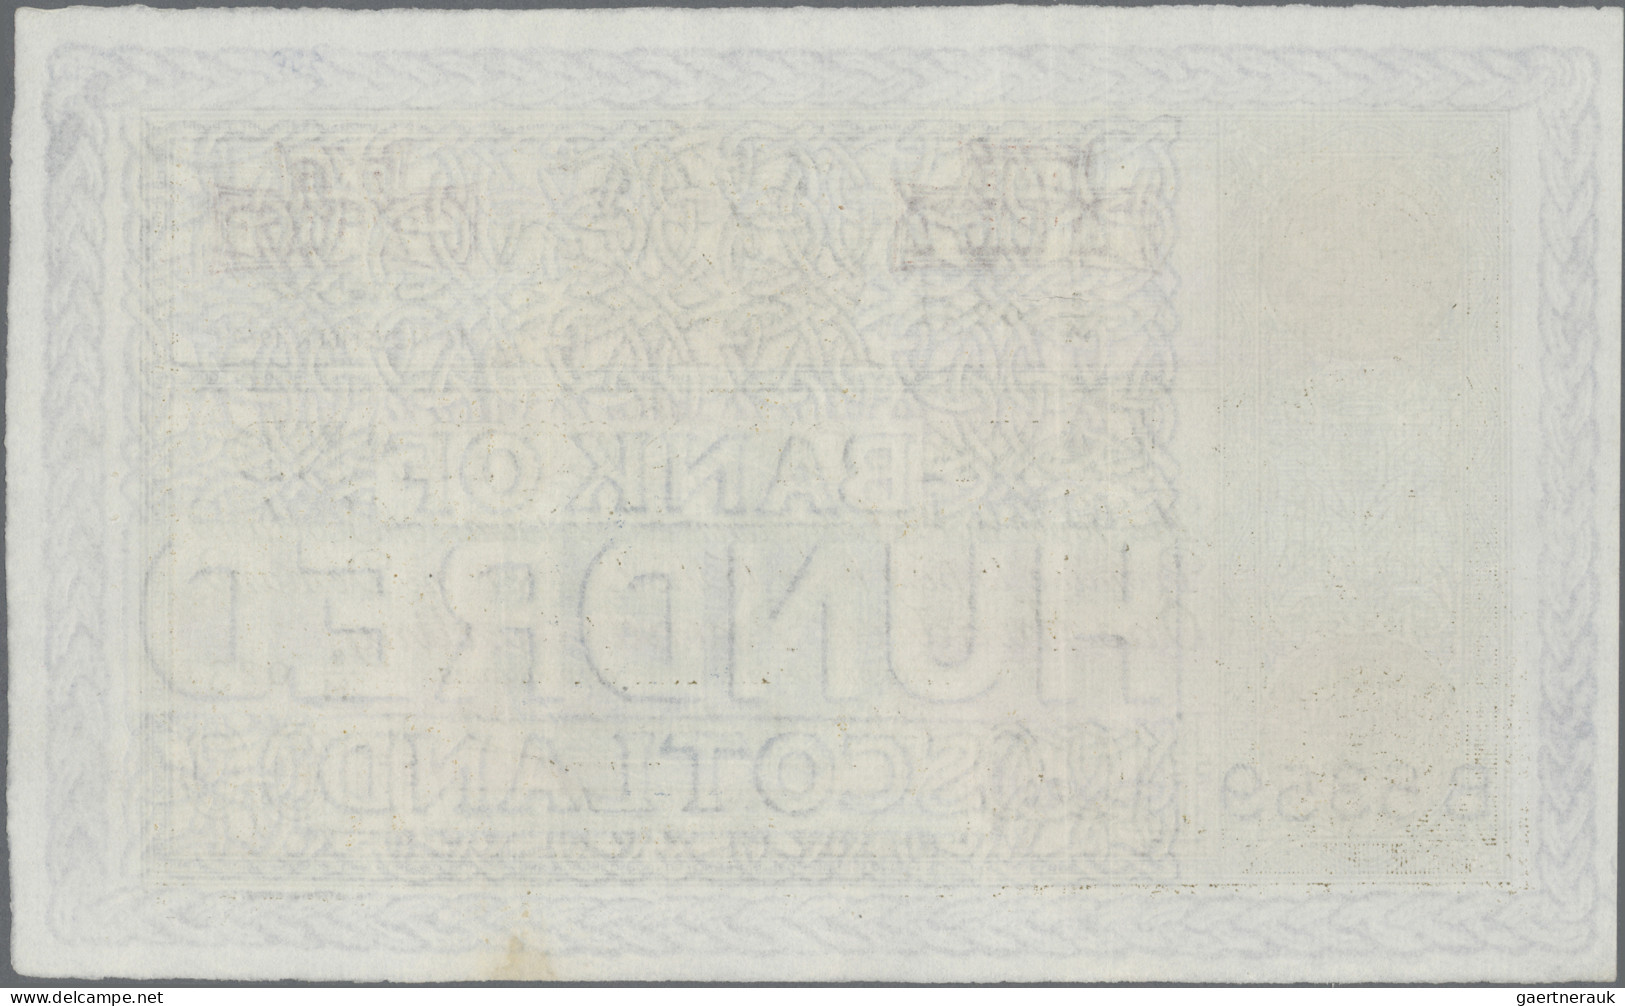 Scotland: Bank Of Scotland, 100 Pounds 16th November 1962, Signatures: Bilsland - Autres & Non Classés